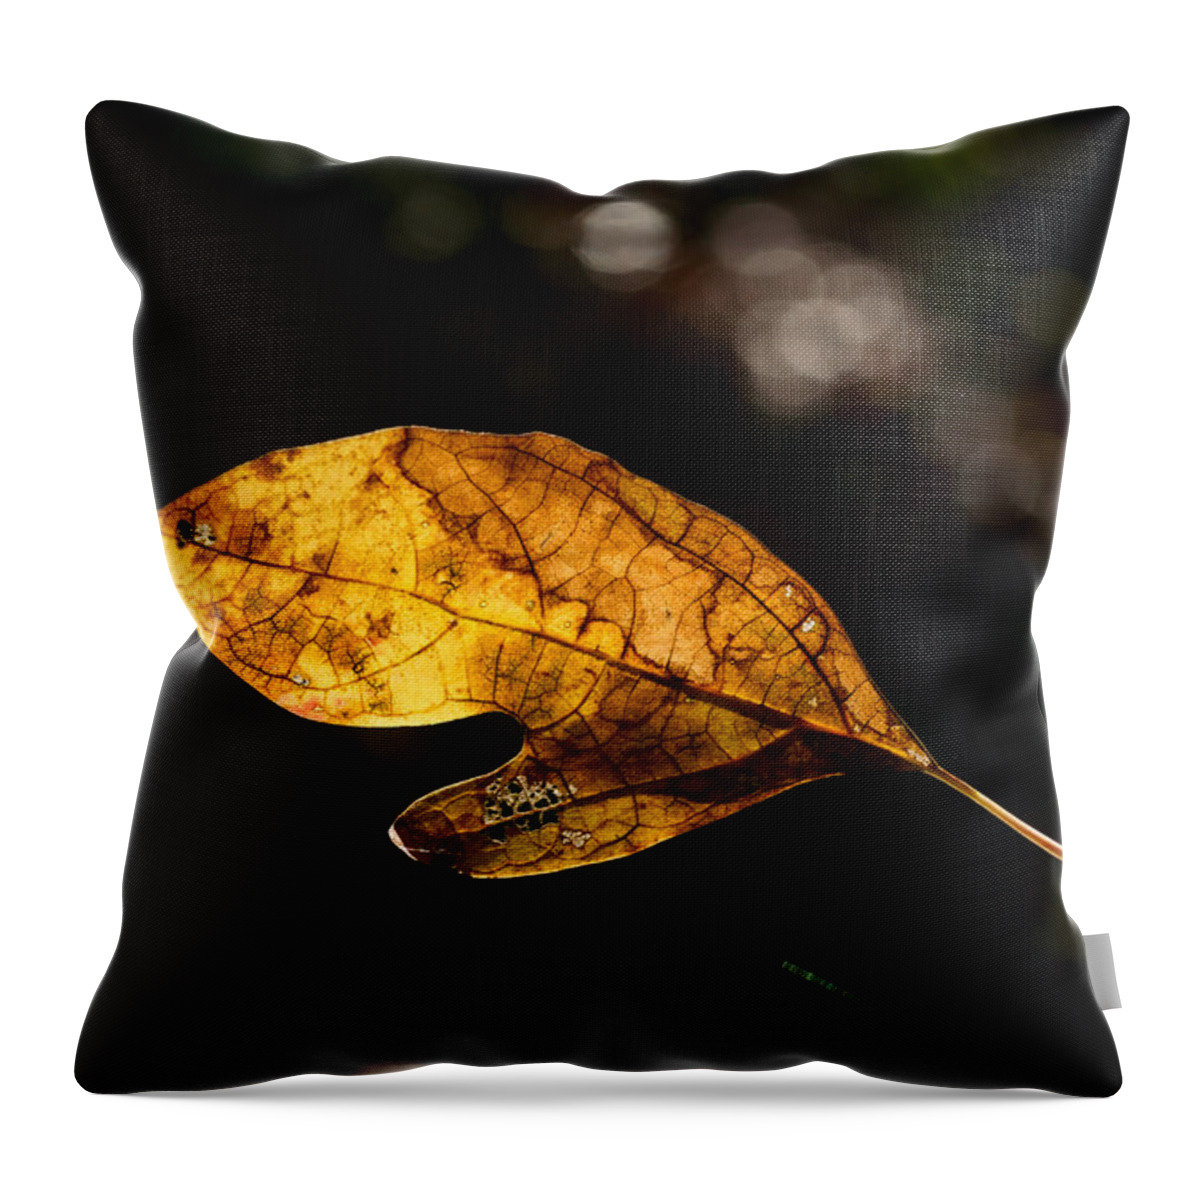 Sassafras Throw Pillow featuring the photograph Sassafras Leaf Illuminated 1 by Douglas Barnett